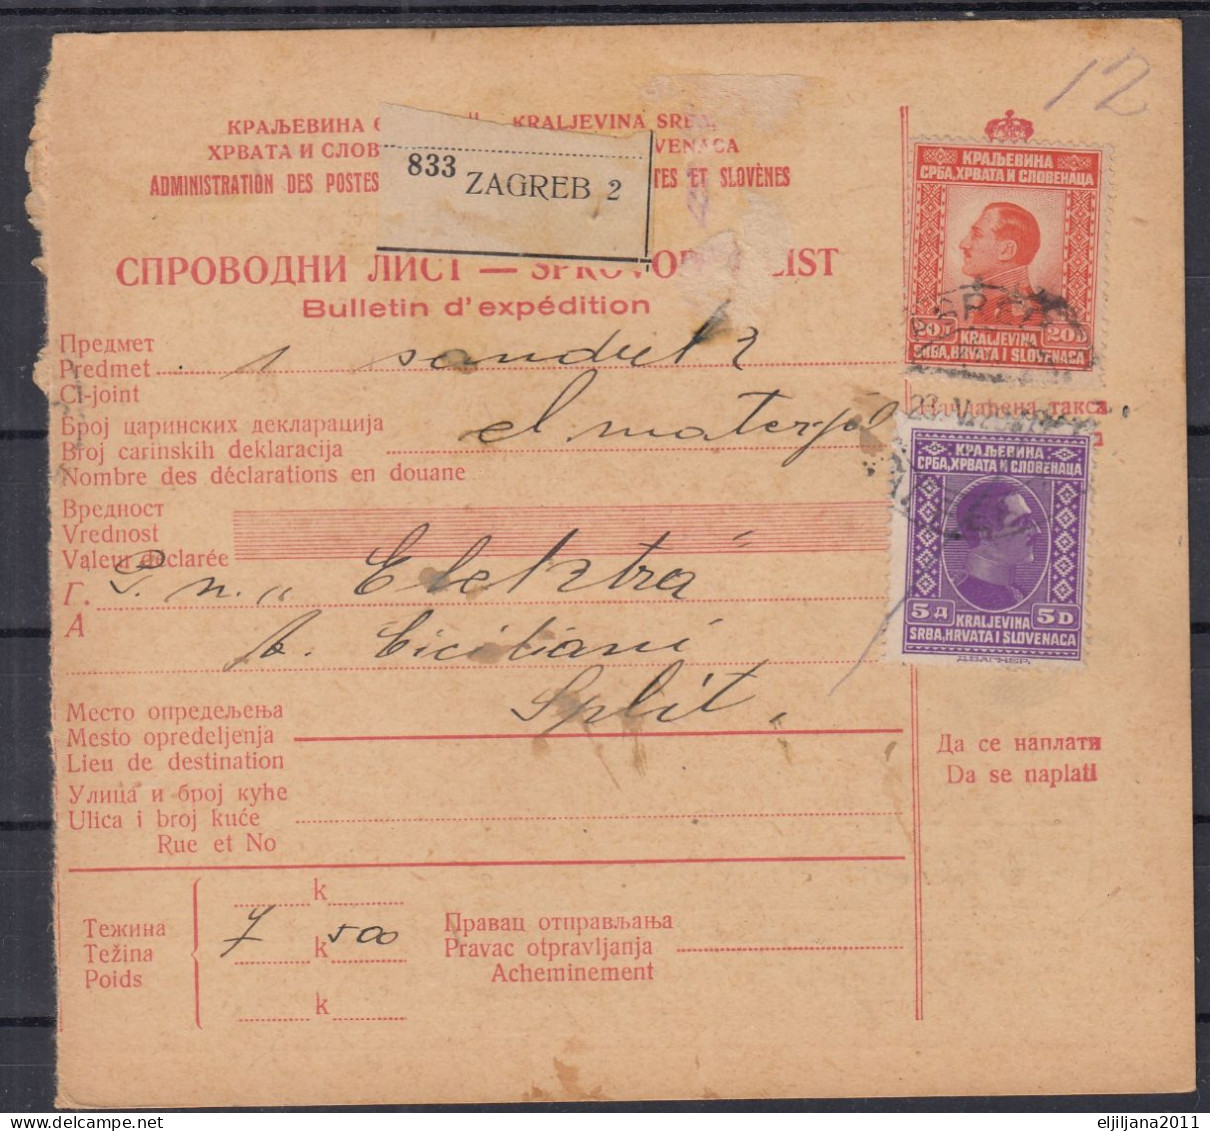 ⁕ Kingdom Of Yugoslavia 1928 ⁕ Parcel Post - Receipt ( Sprovodni List ) Electrical Material ⁕ Zagreb To Split - Storia Postale